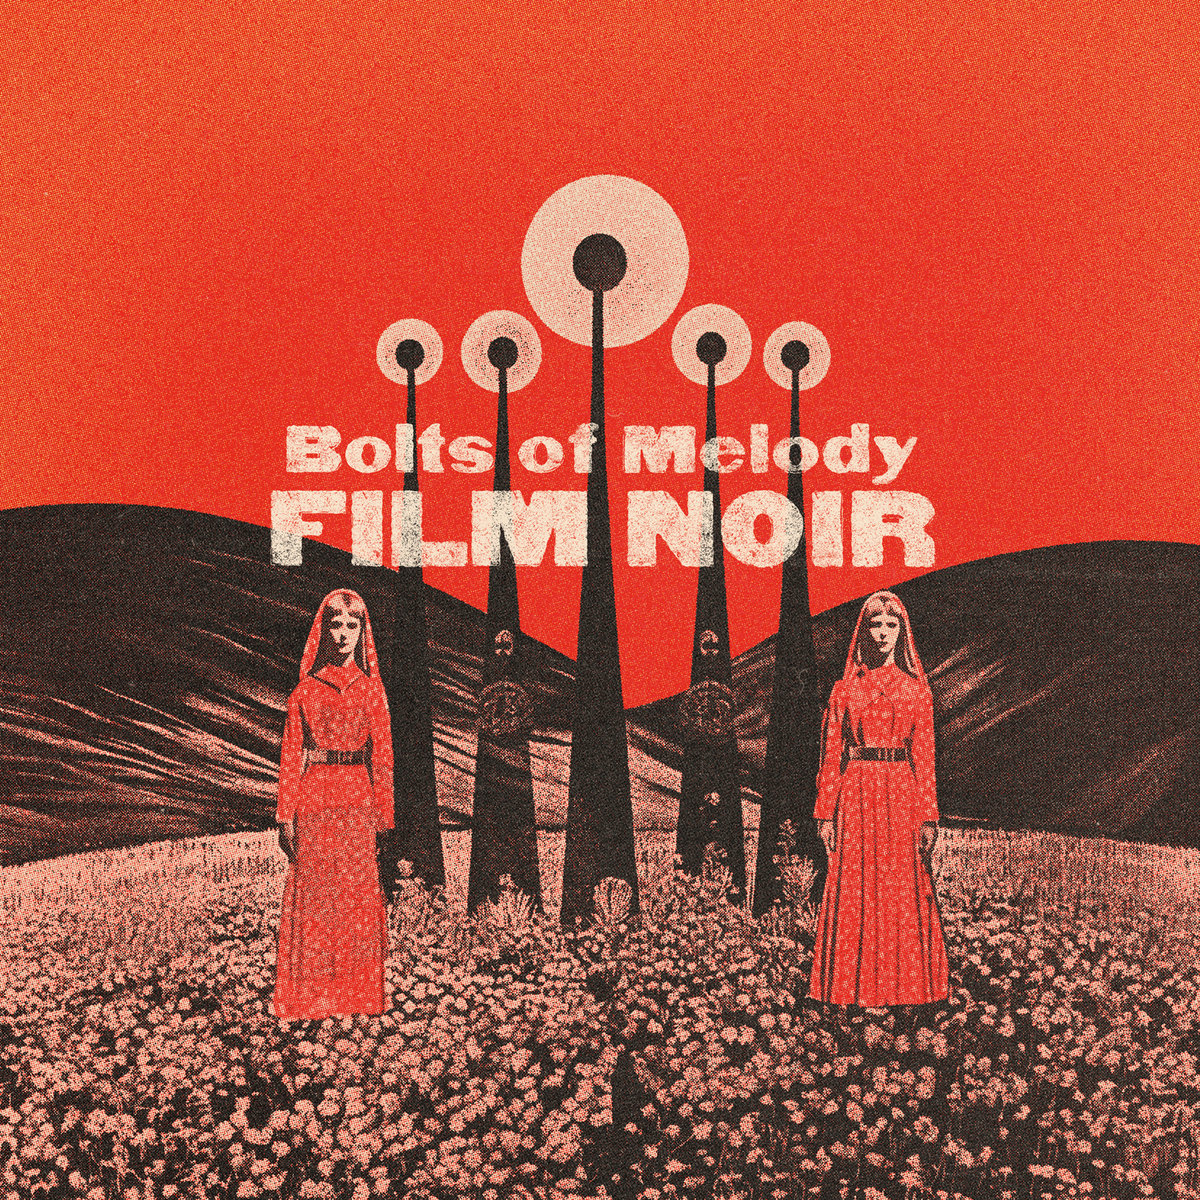 bolts of melody film noir